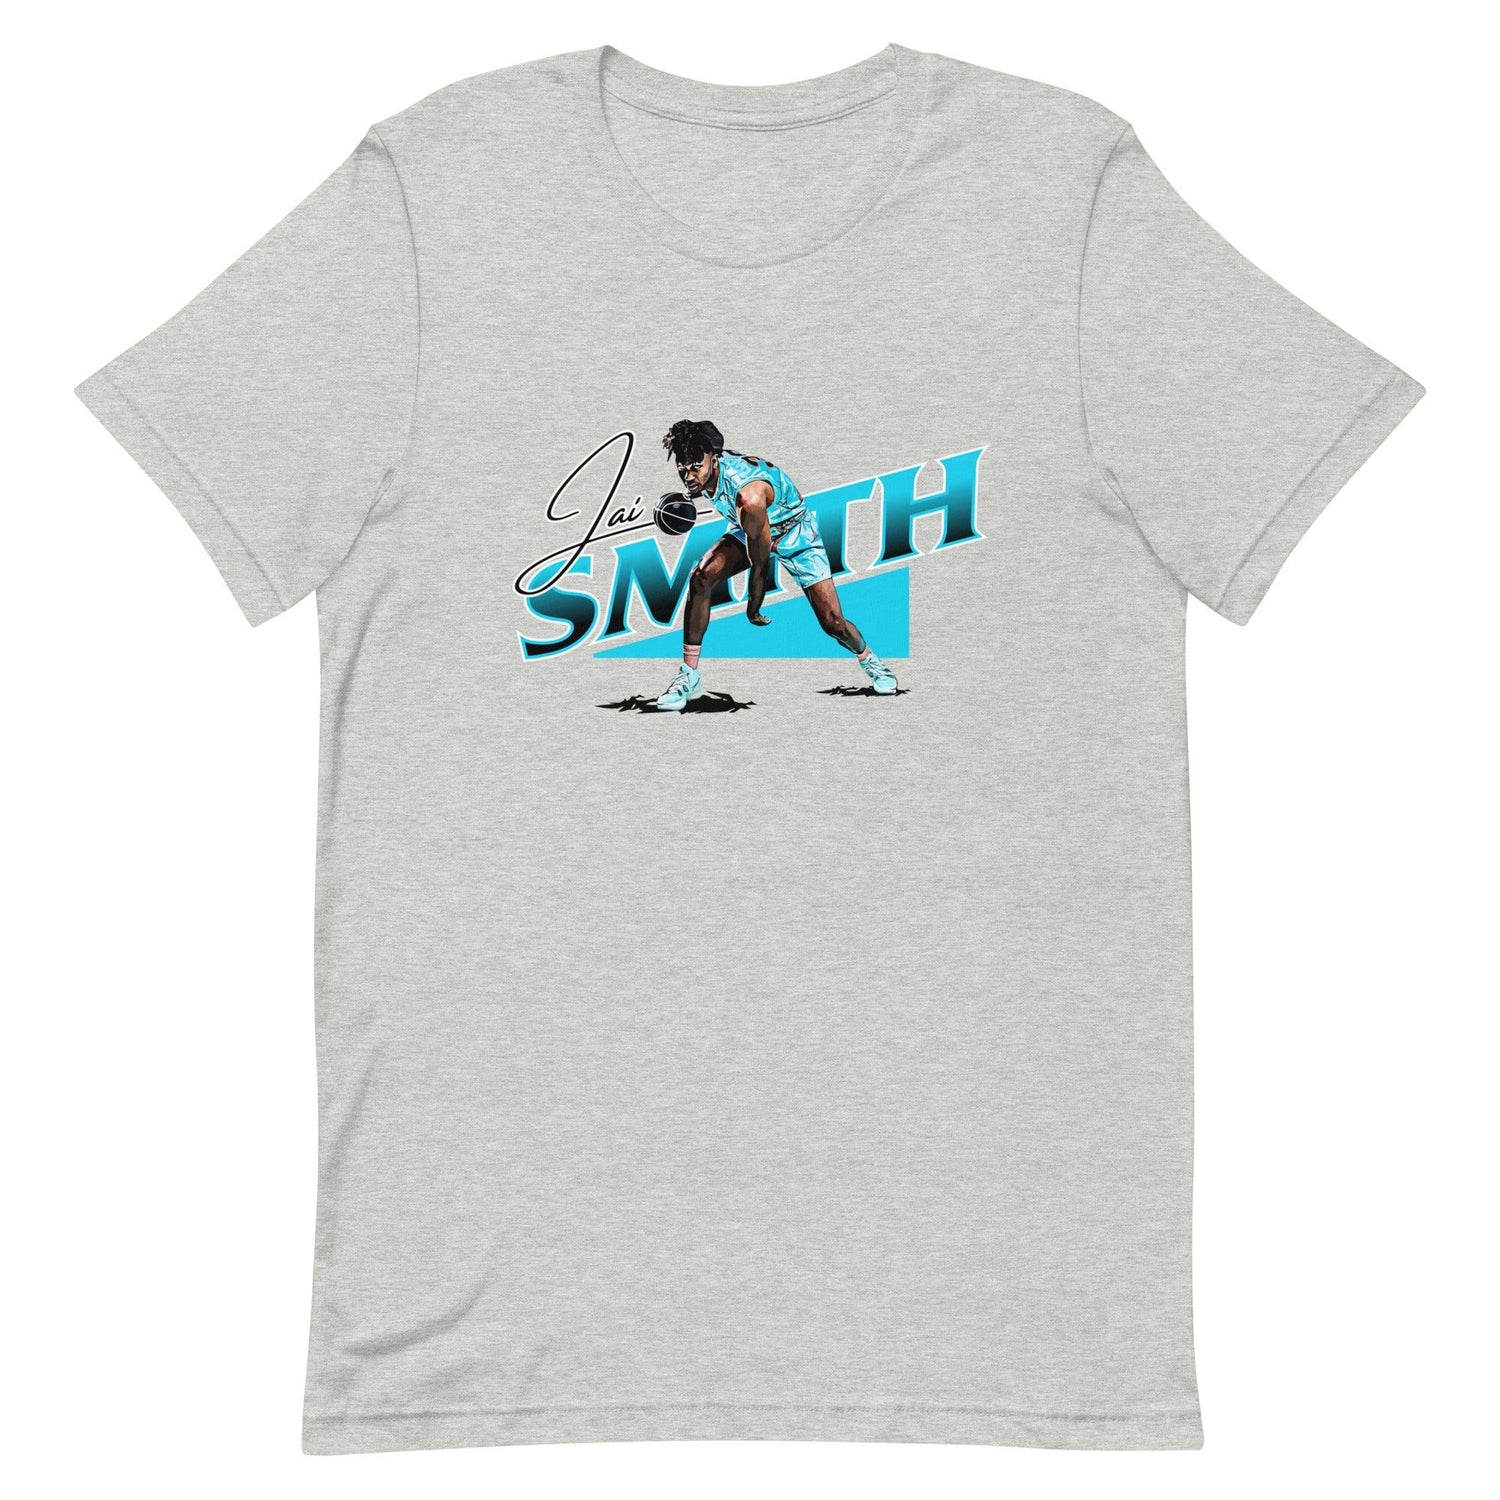 Jai Smith "Iceman" t-shirt - Fan Arch